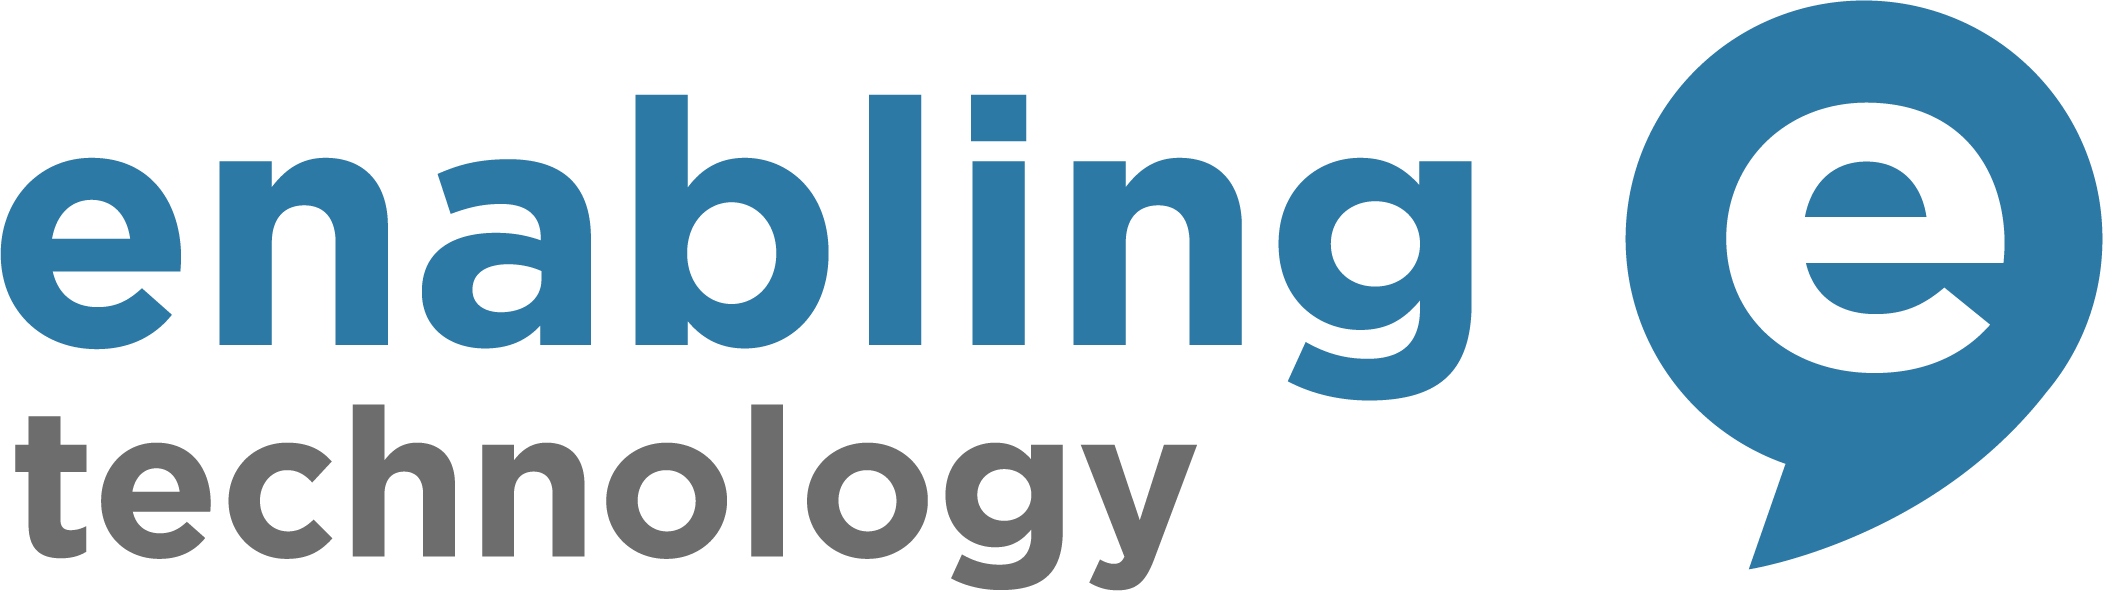 Enabling Technology Logo by Simple Story Marketing StoryBrand Guides UK